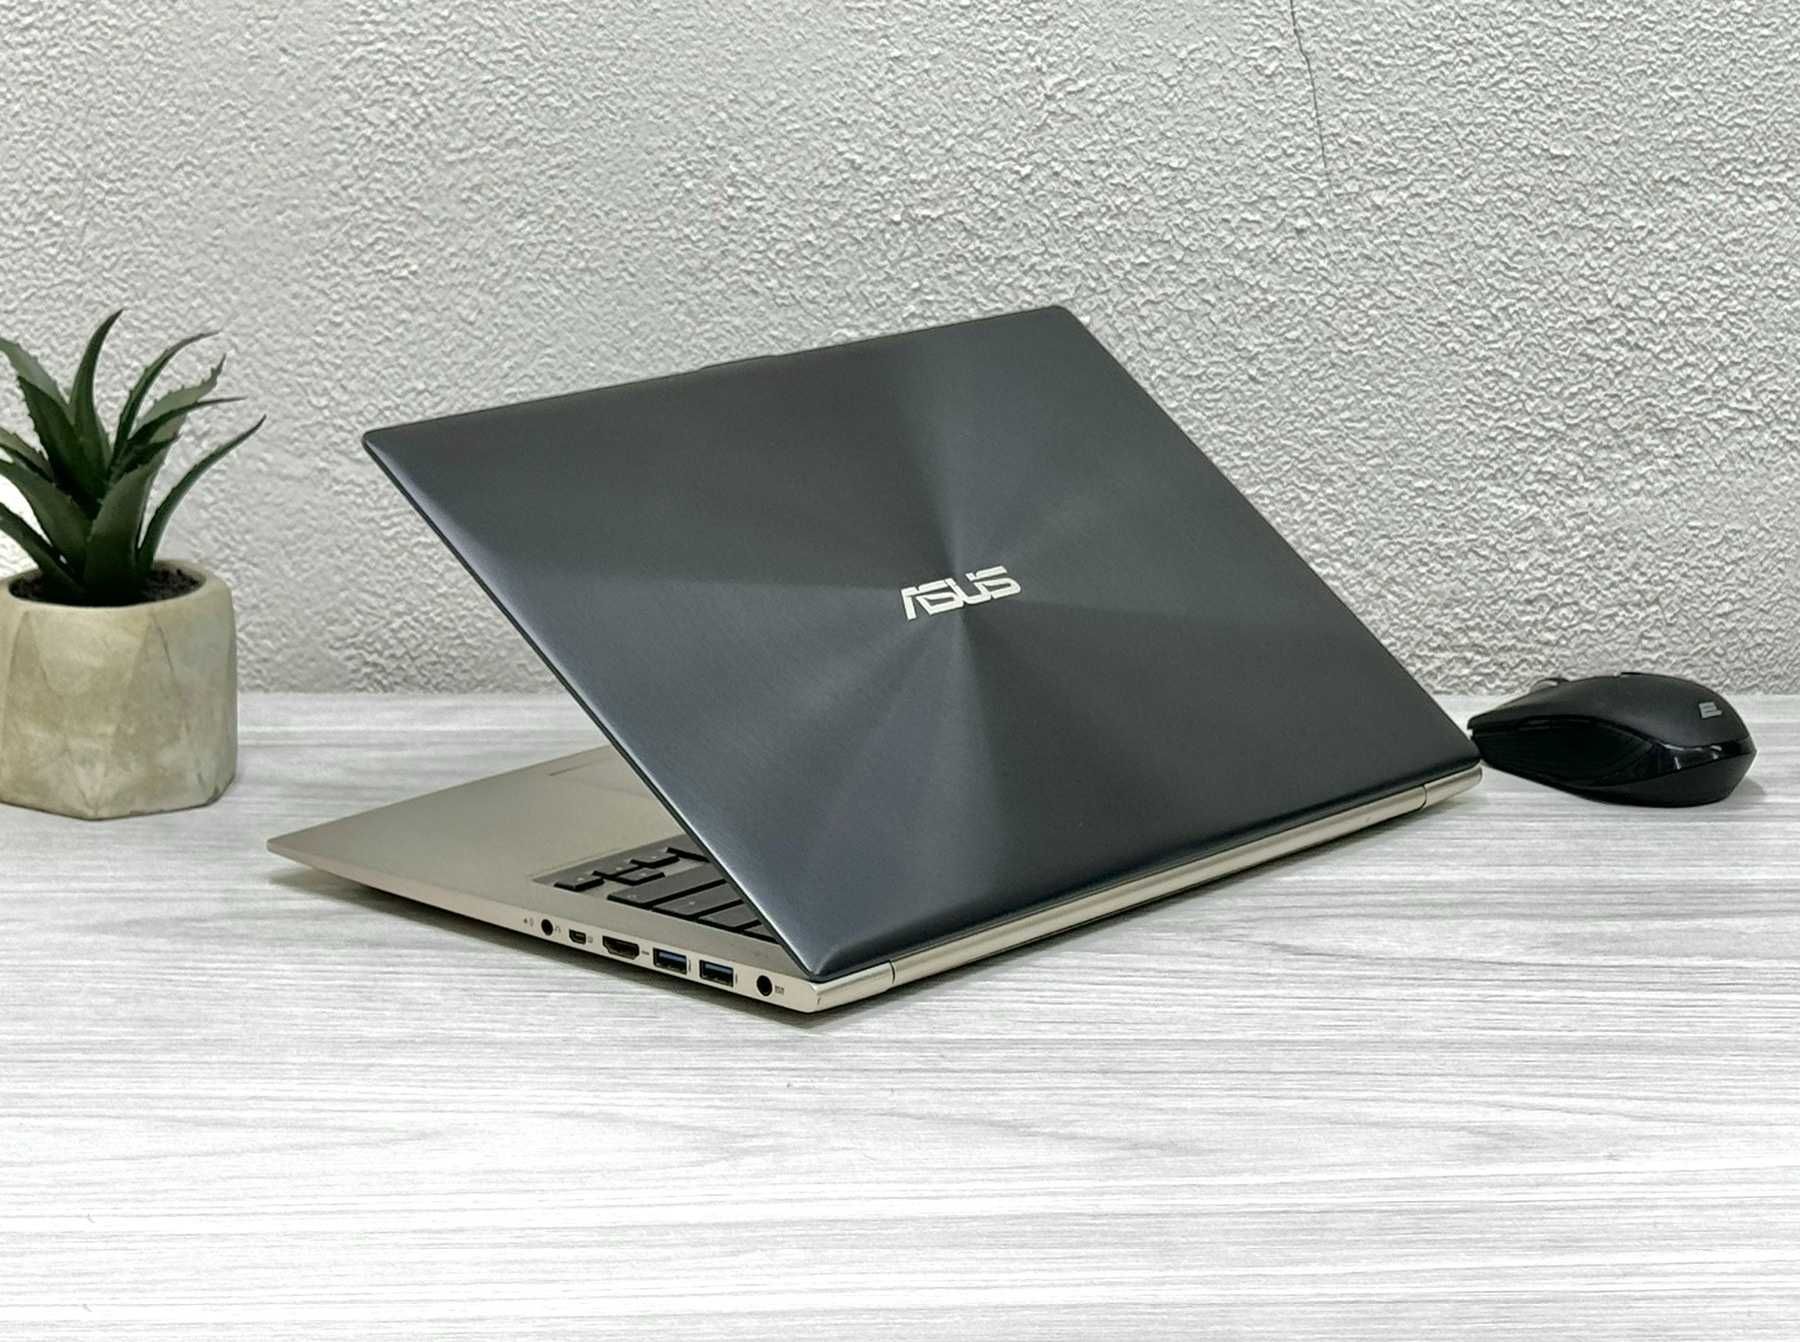 • Металевий Ультрабук Asus Zenbook (Core i7, SSD) Є оплата ЧАСТИНАМИ •